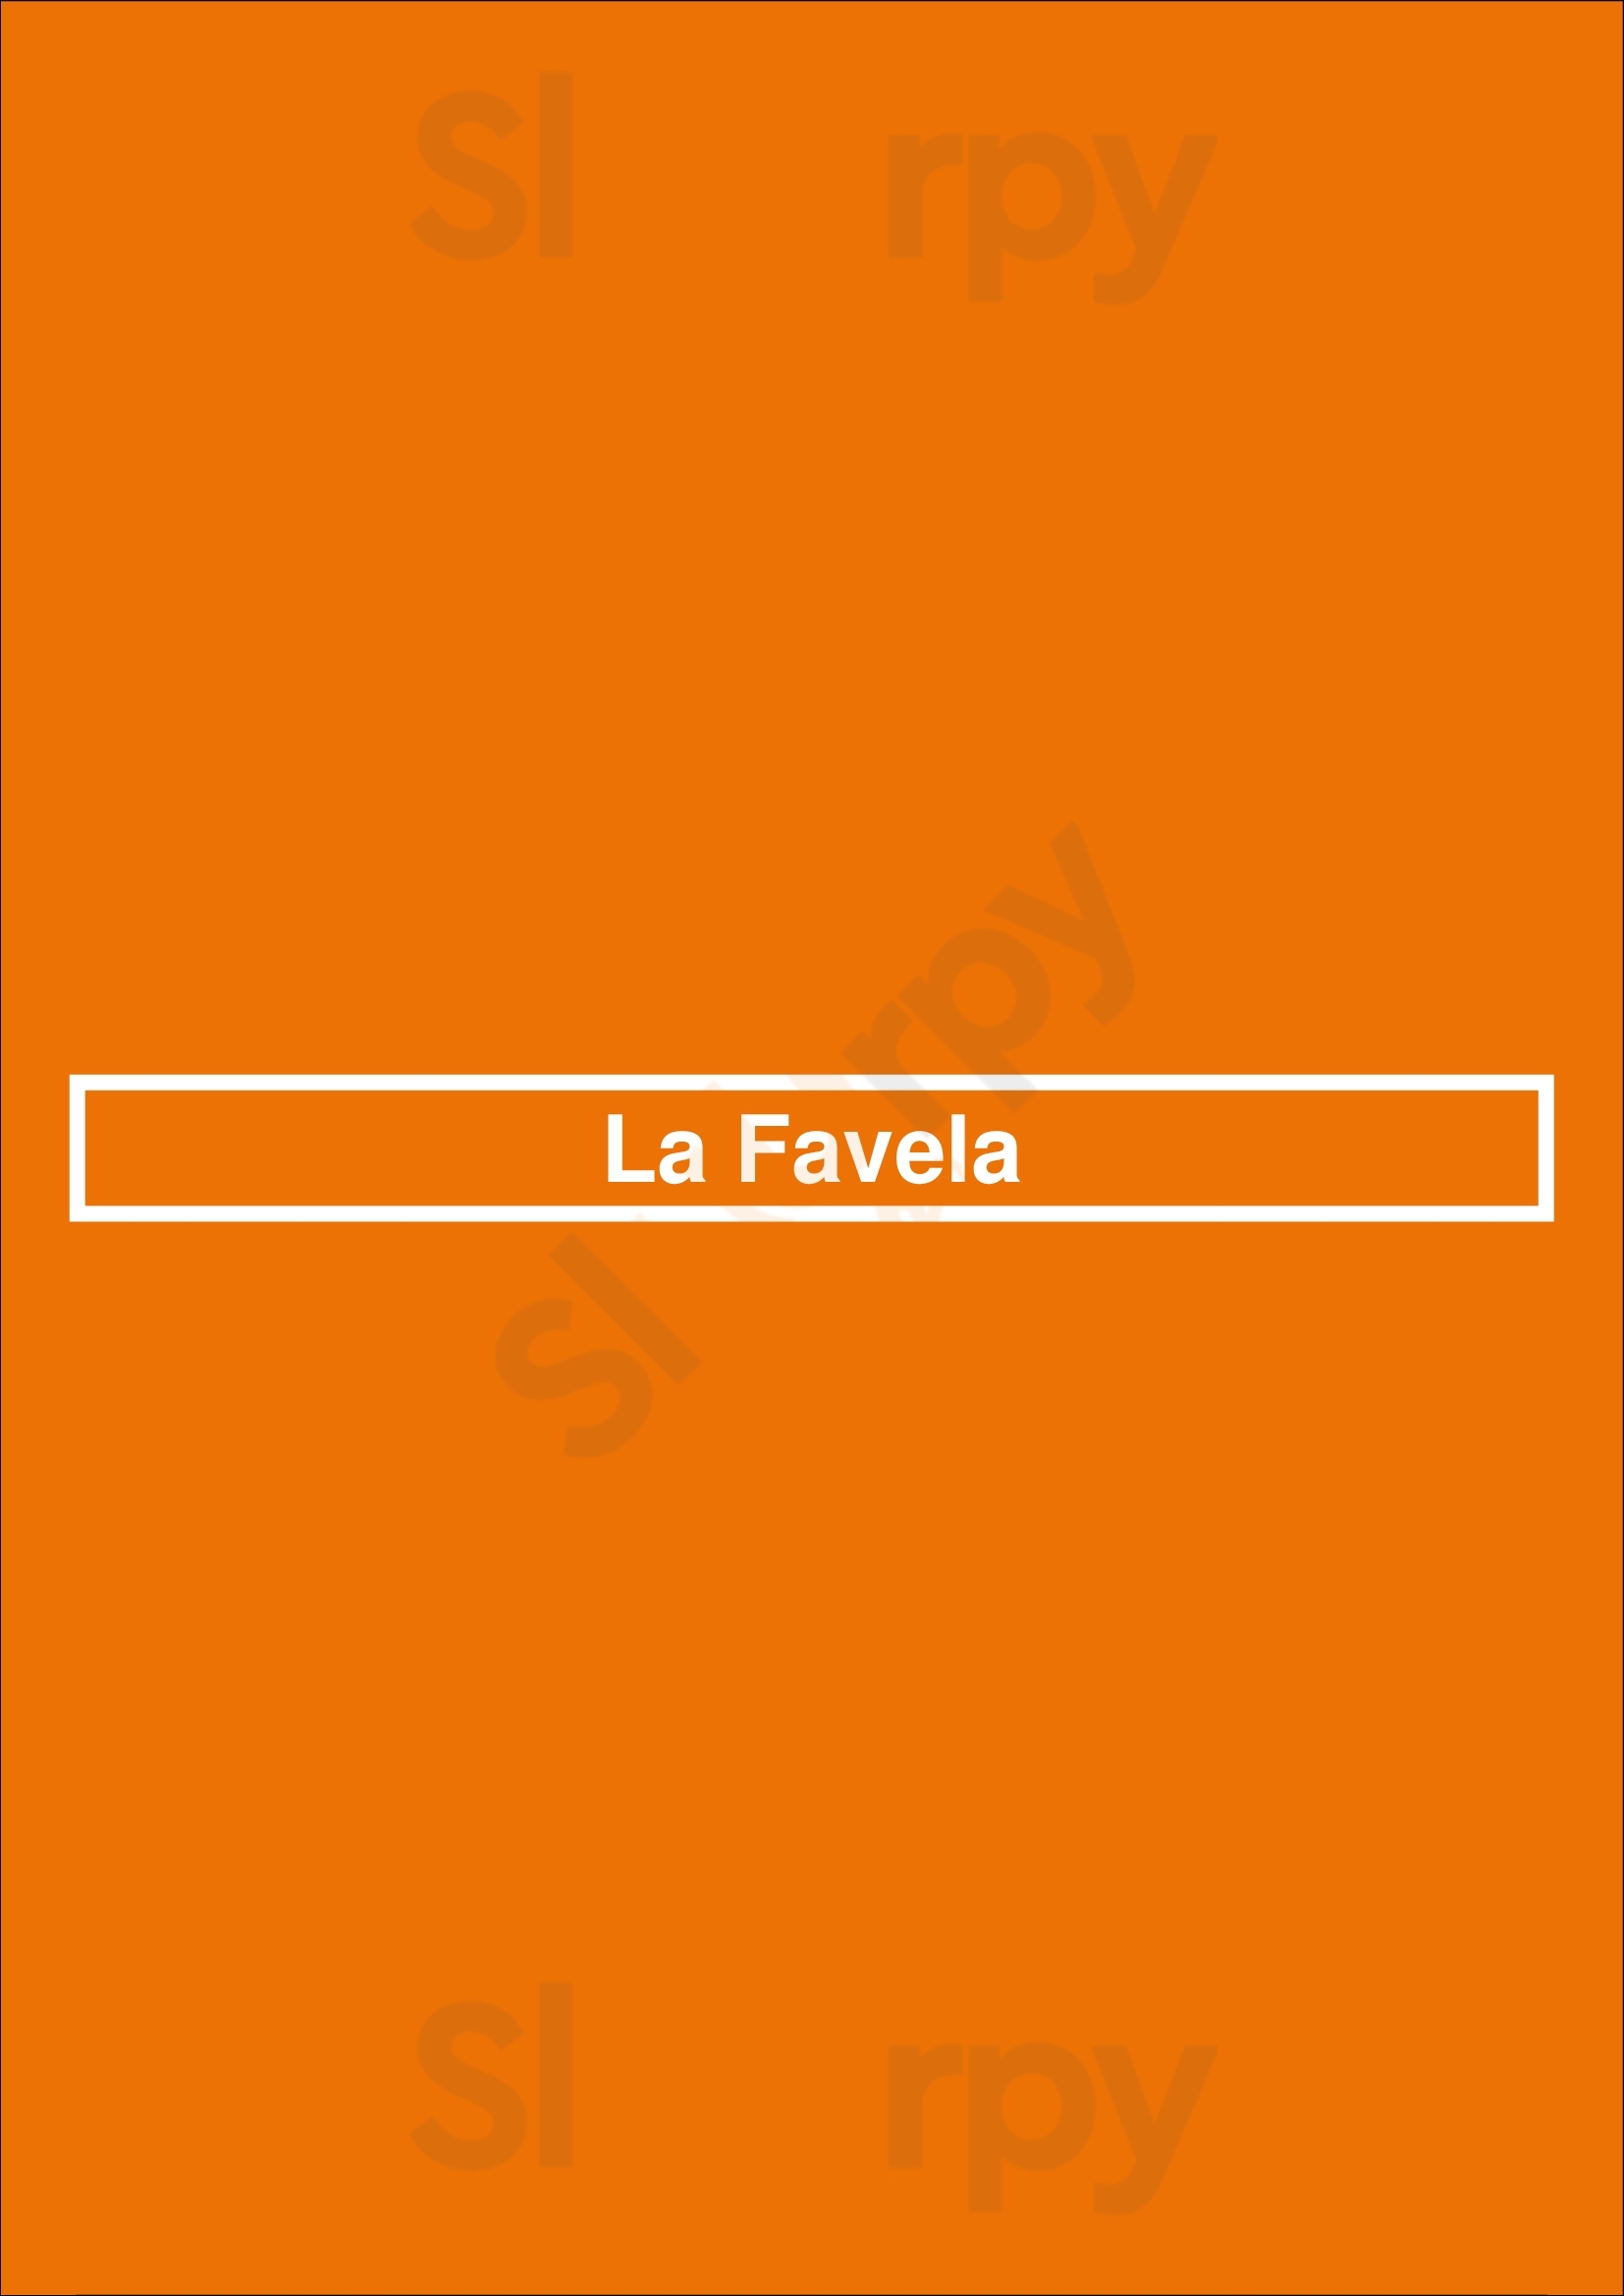 La Favela Amsterdam Menu - 1